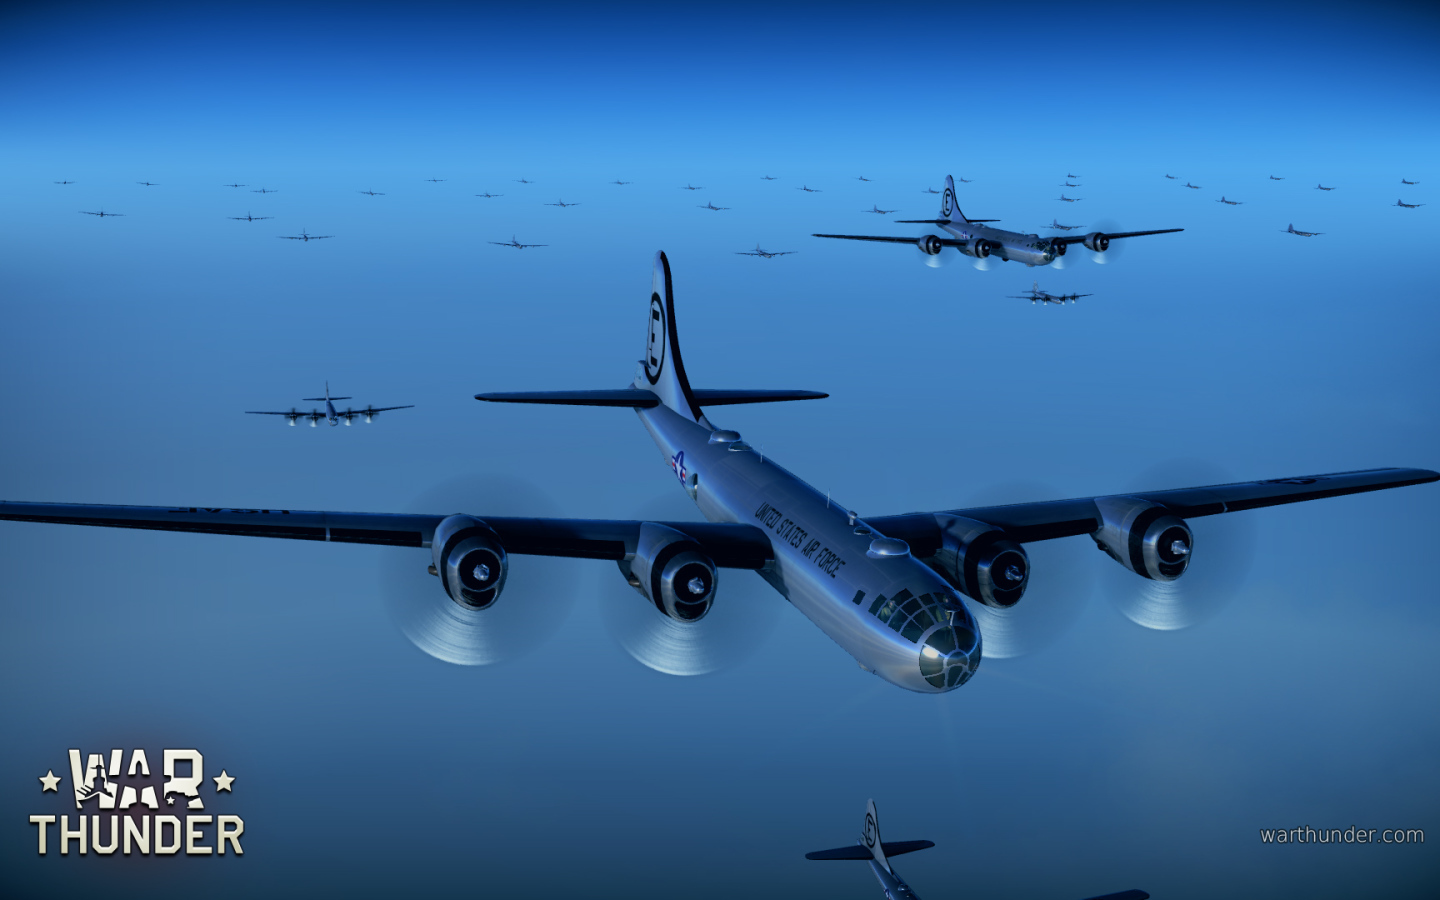 War Thunder war planes in blue sky